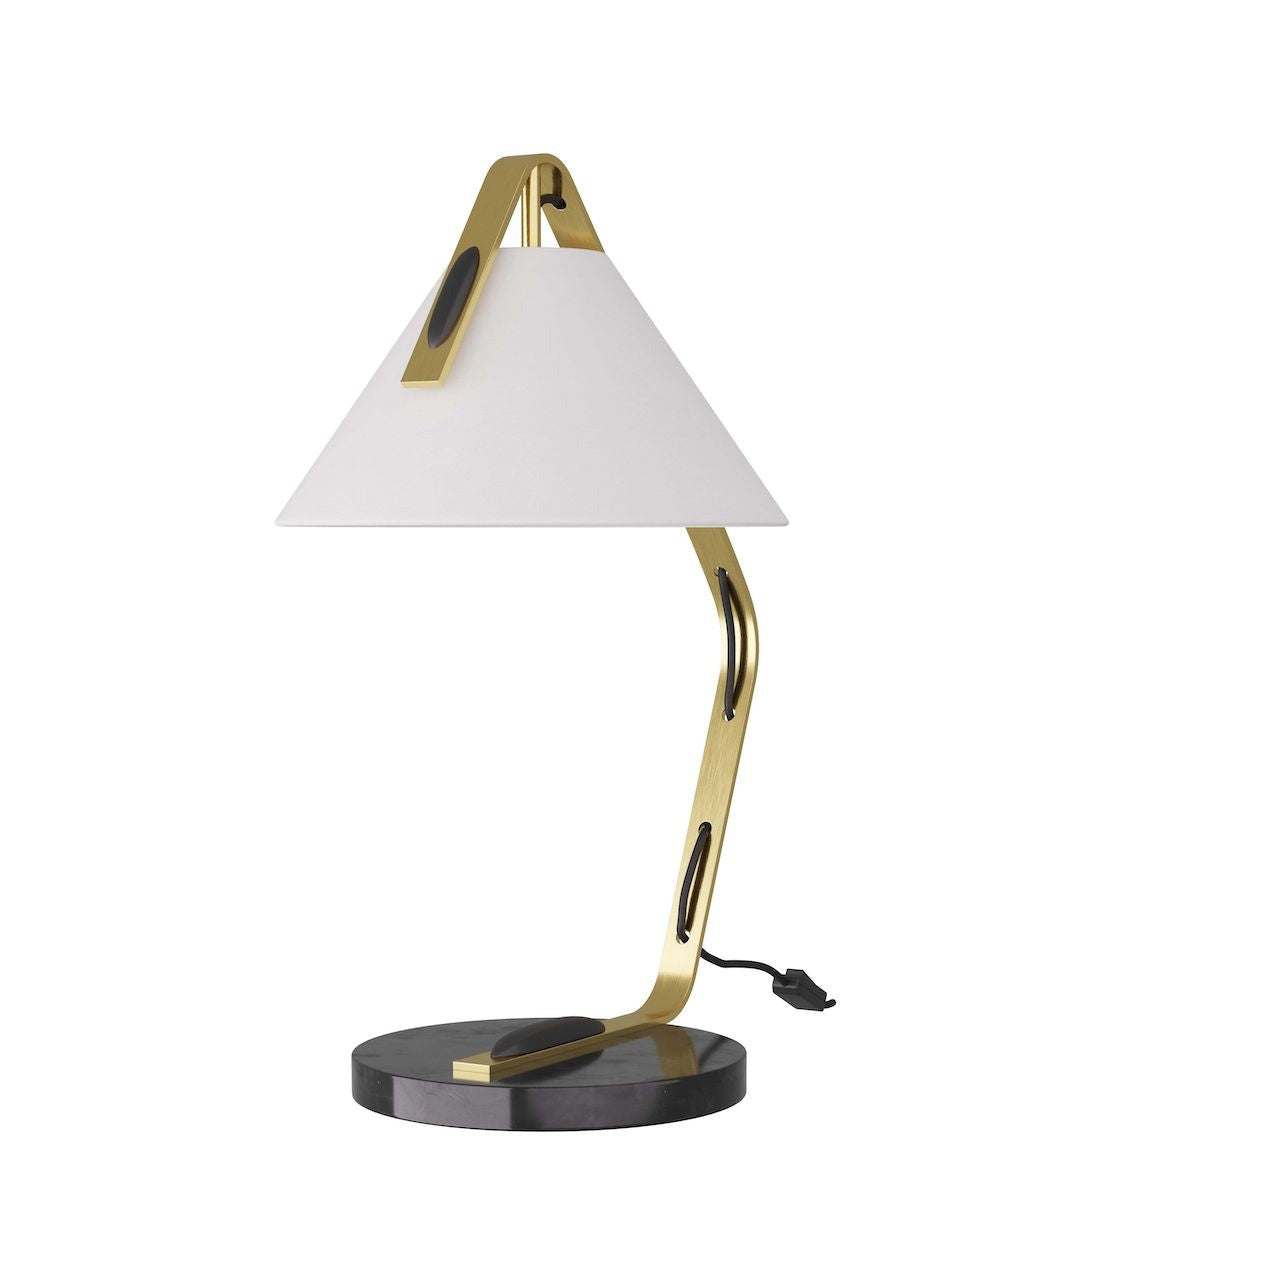 Arteriors Home Elden Floor Lamp Black Resin and Antique Brass – CLAYTON  GRAY HOME